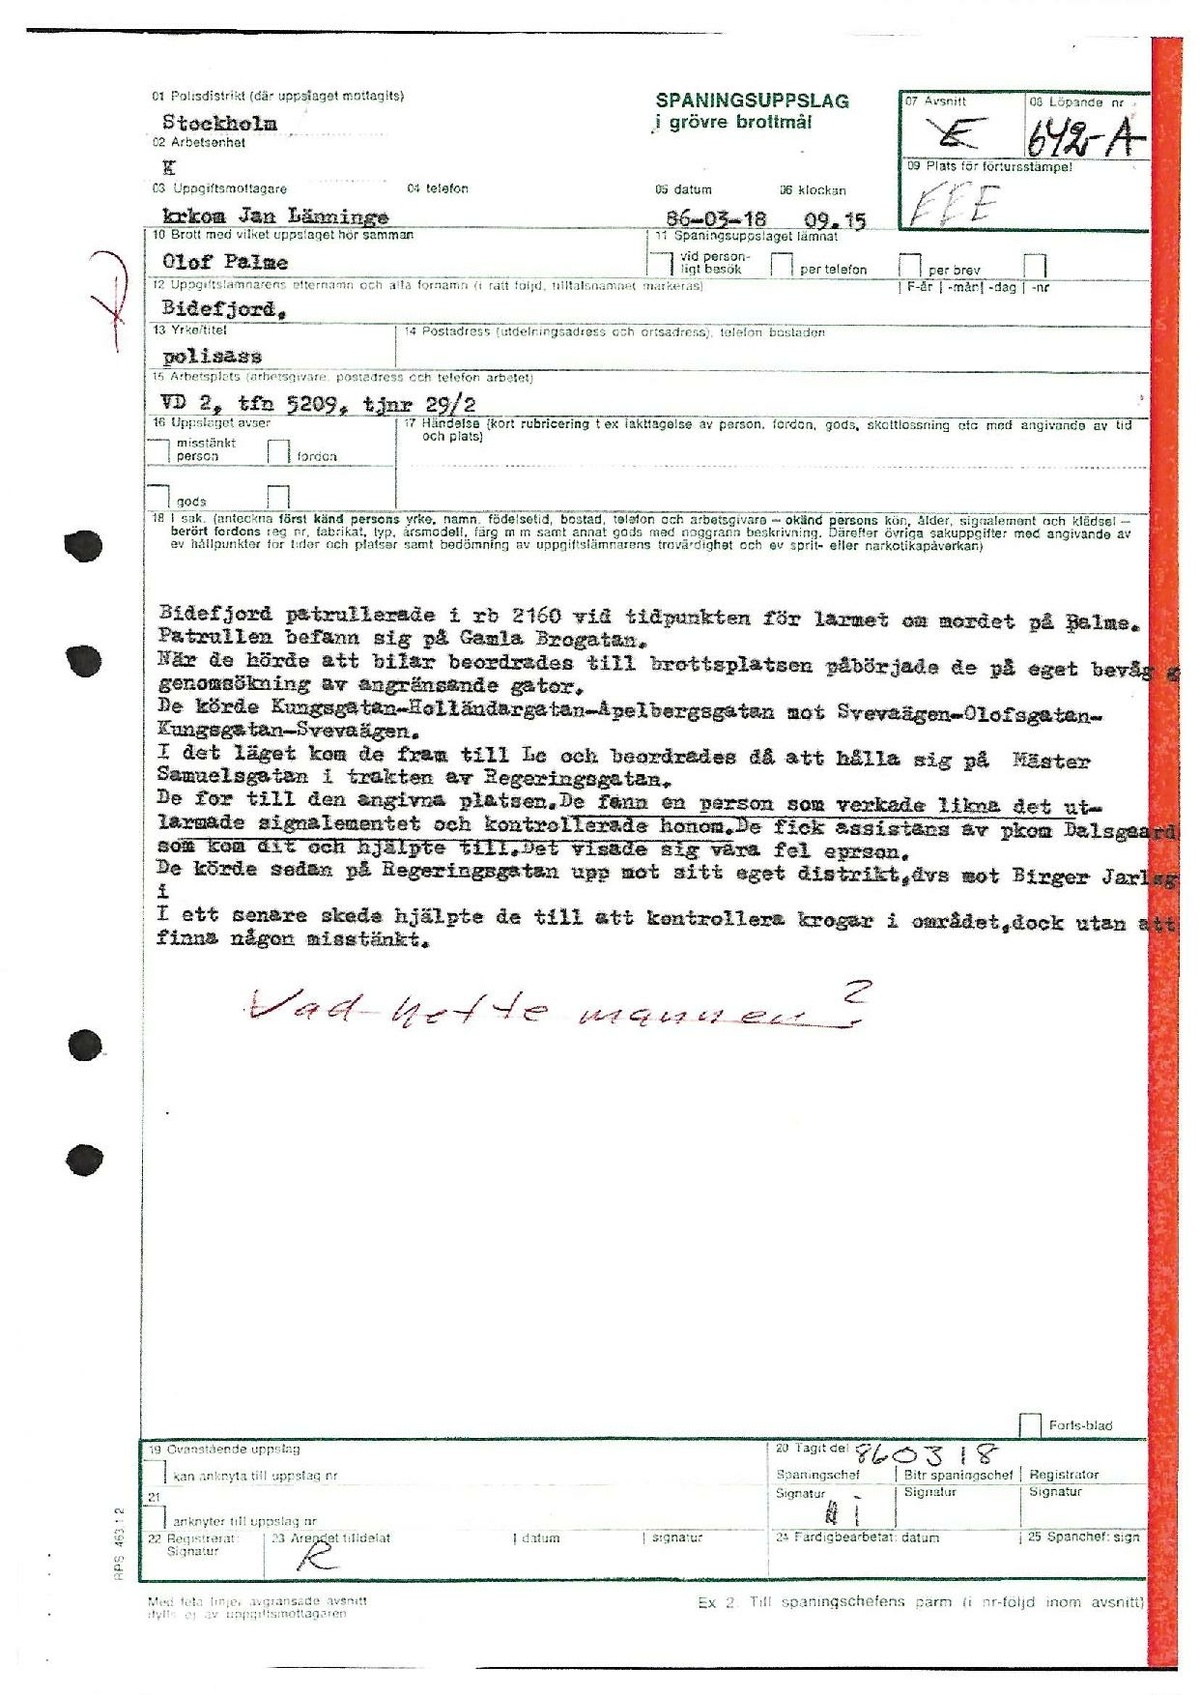 Pol-1986-03-18 EEE642-00-A Leif Bidefjord rb 2160 pdf.pdf